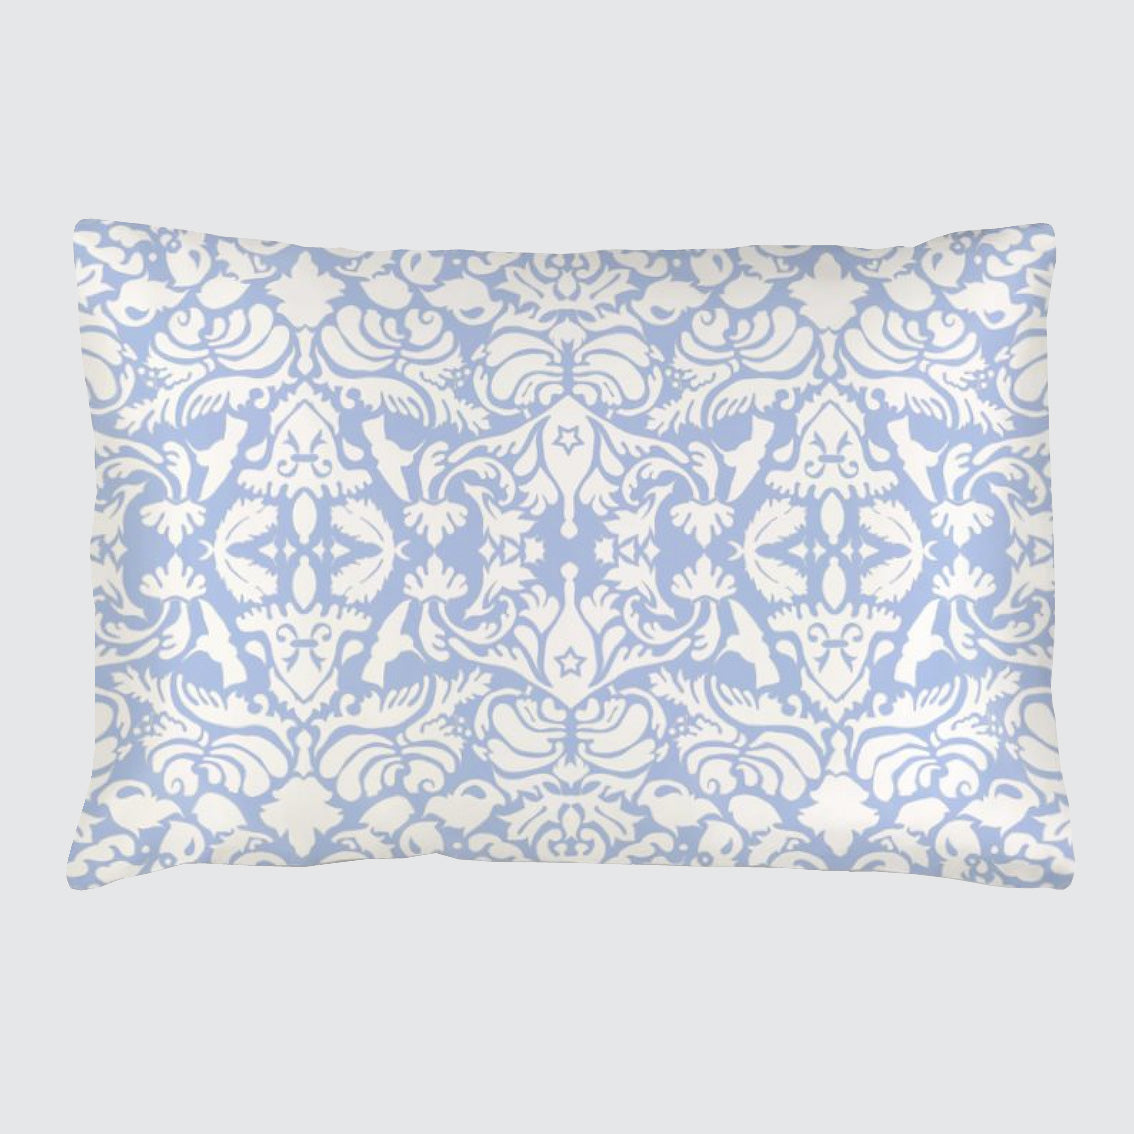 Silk Pillowcase - Pale Blue With White Hummingbird Damask Pattern